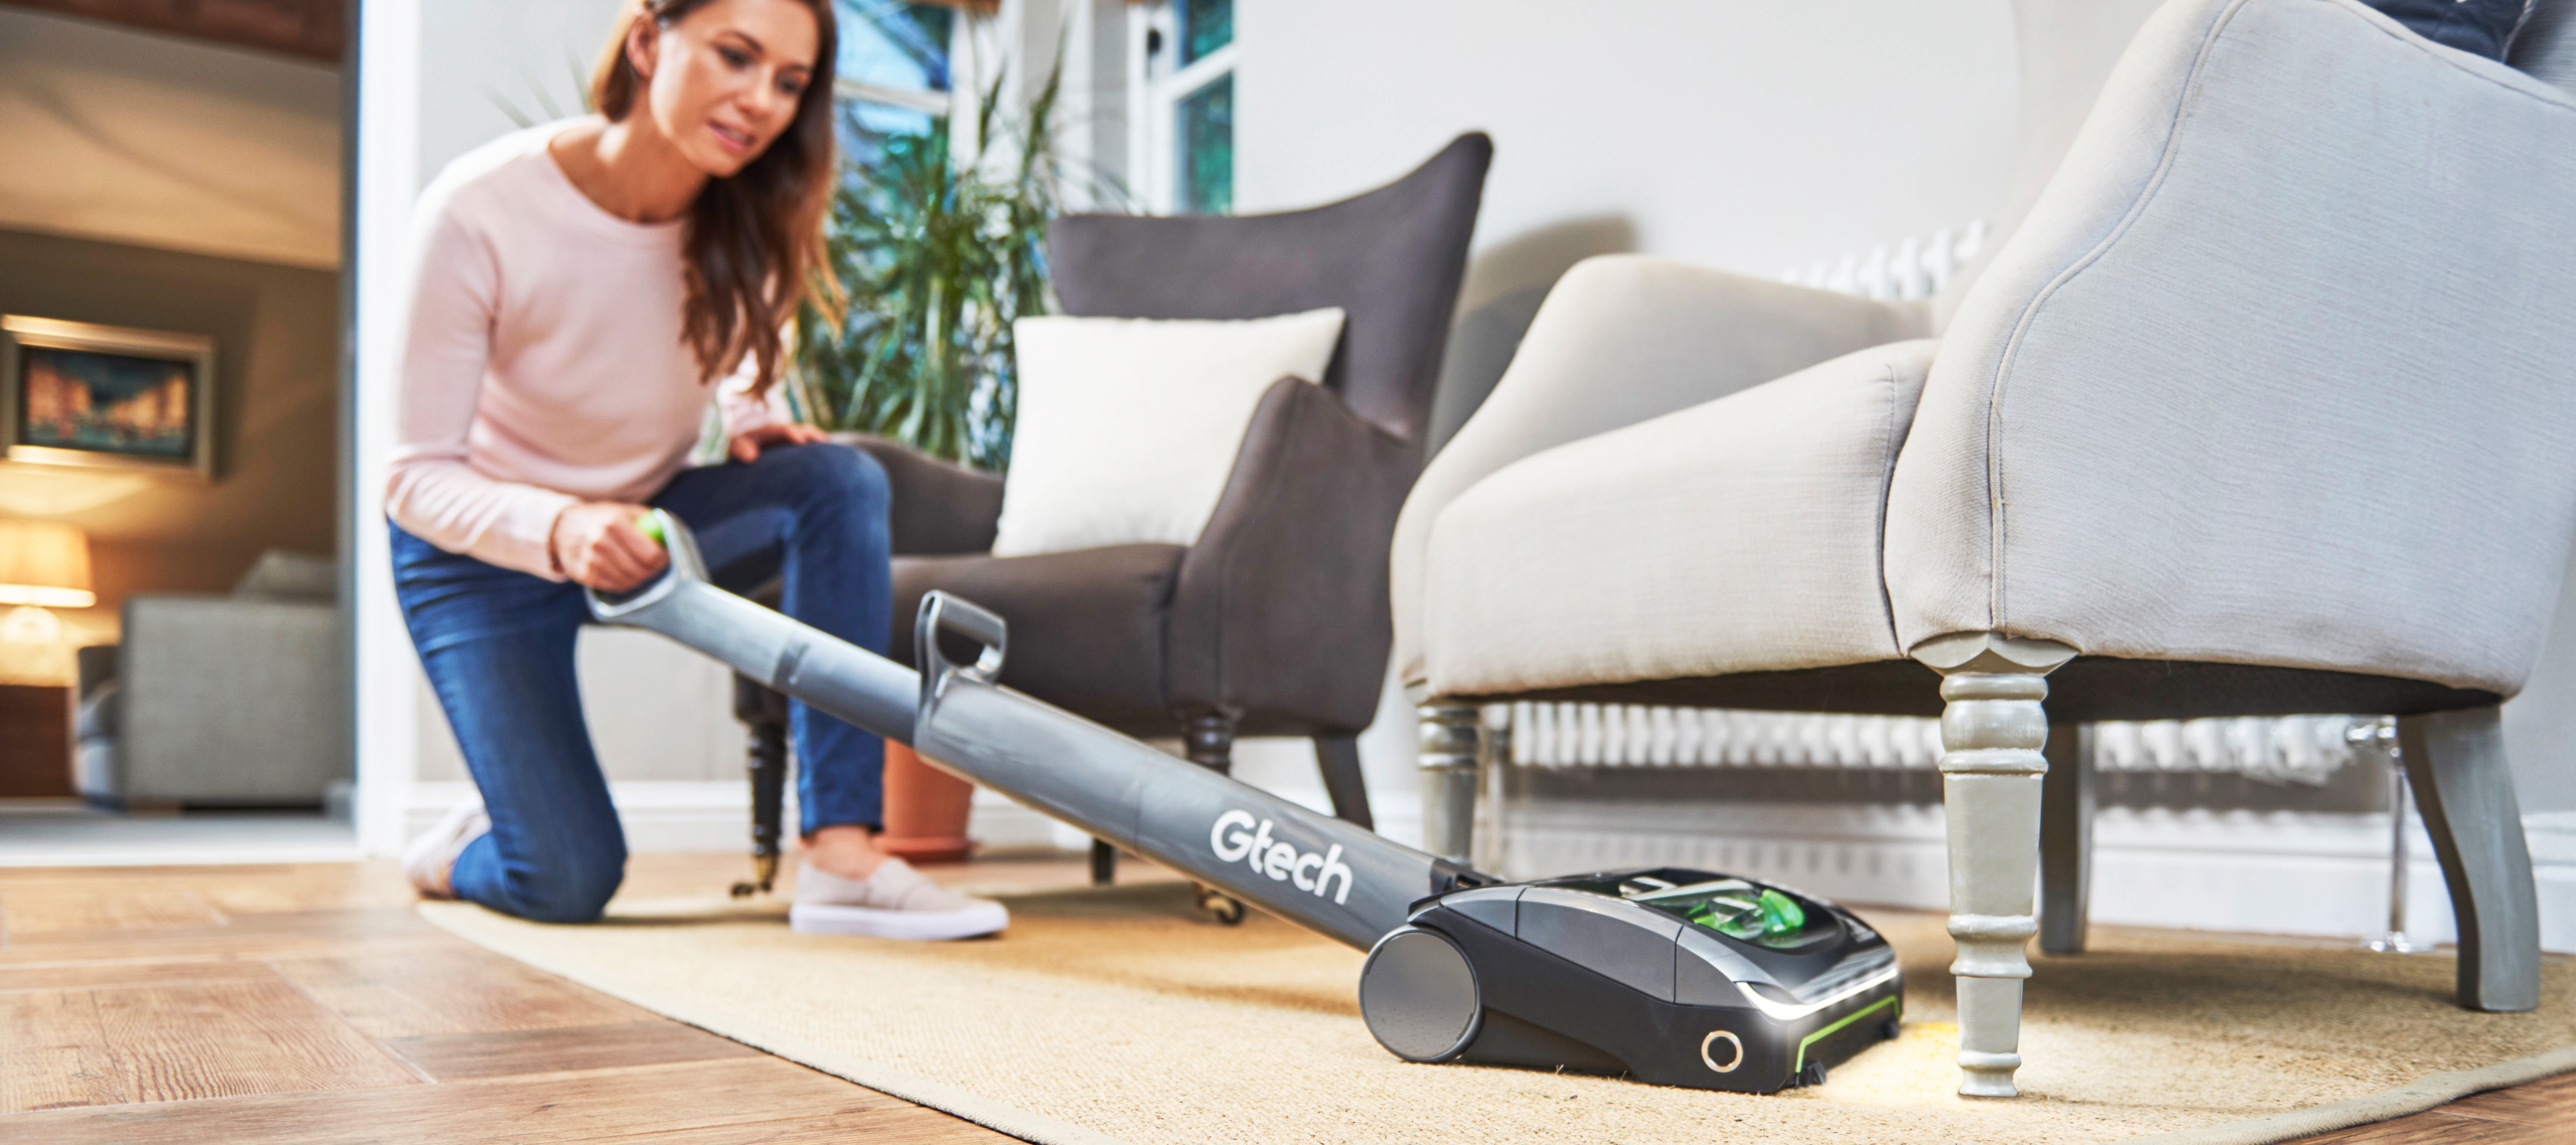 Women uses AirRam cordless vacuum cleaner to reach under sofa